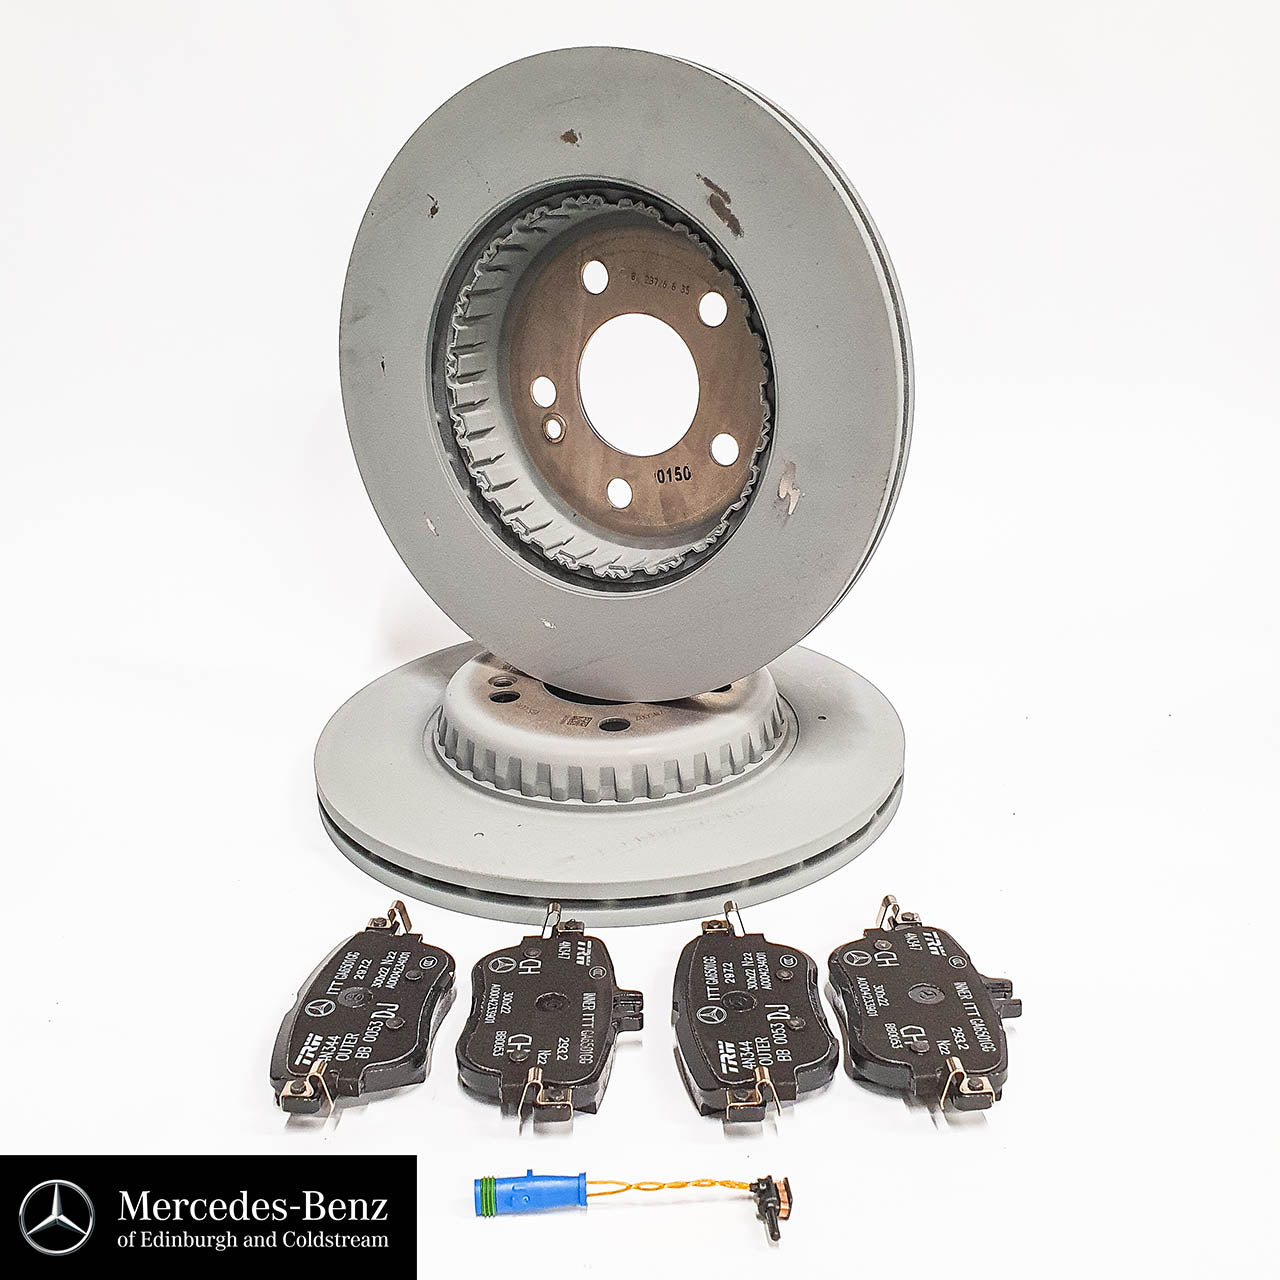 Genuine Mercedes-Benz brake discs, pads & wear sensor REAR E Class C Class CLS GLC